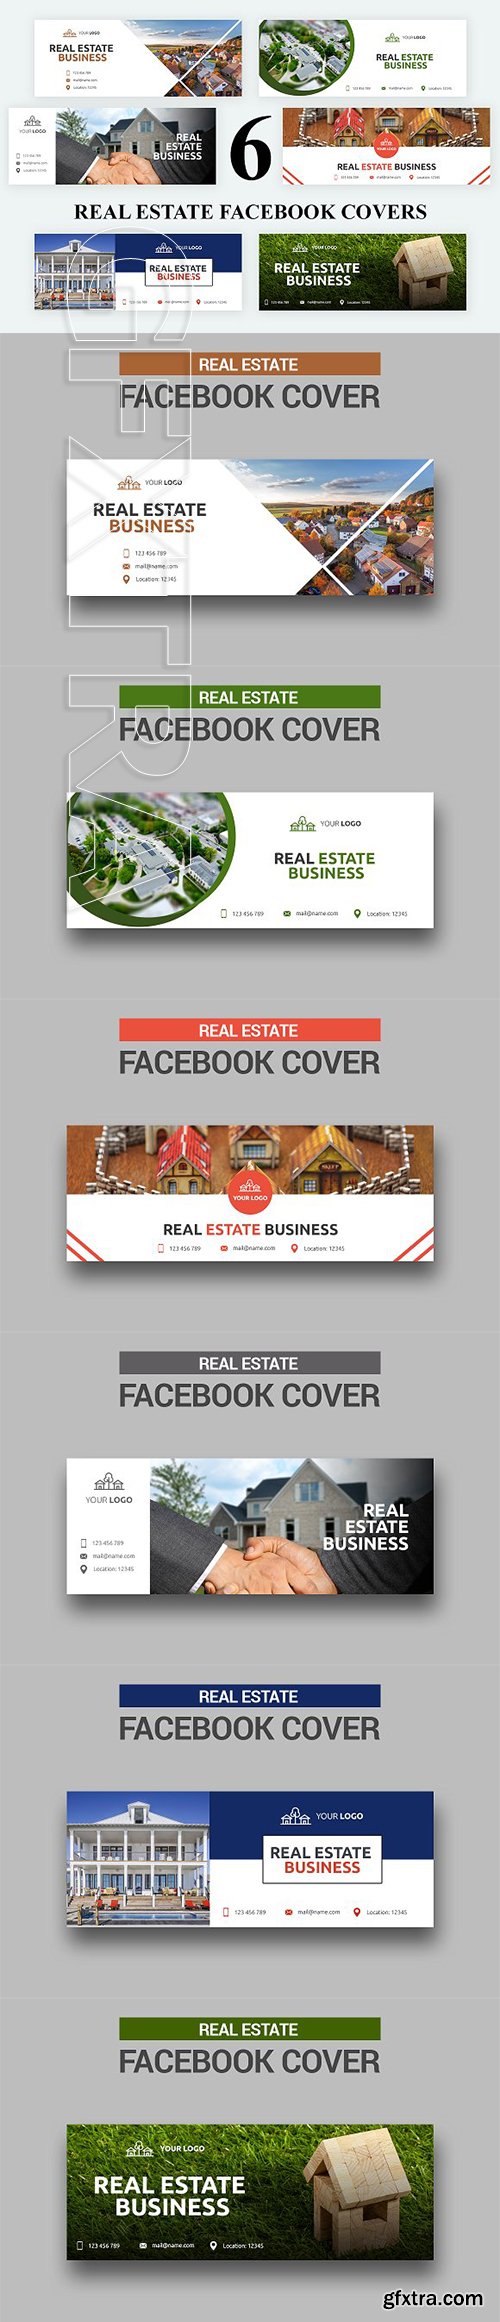 CreativeMarket - Real Estate Facebook Covers - SK 3032786